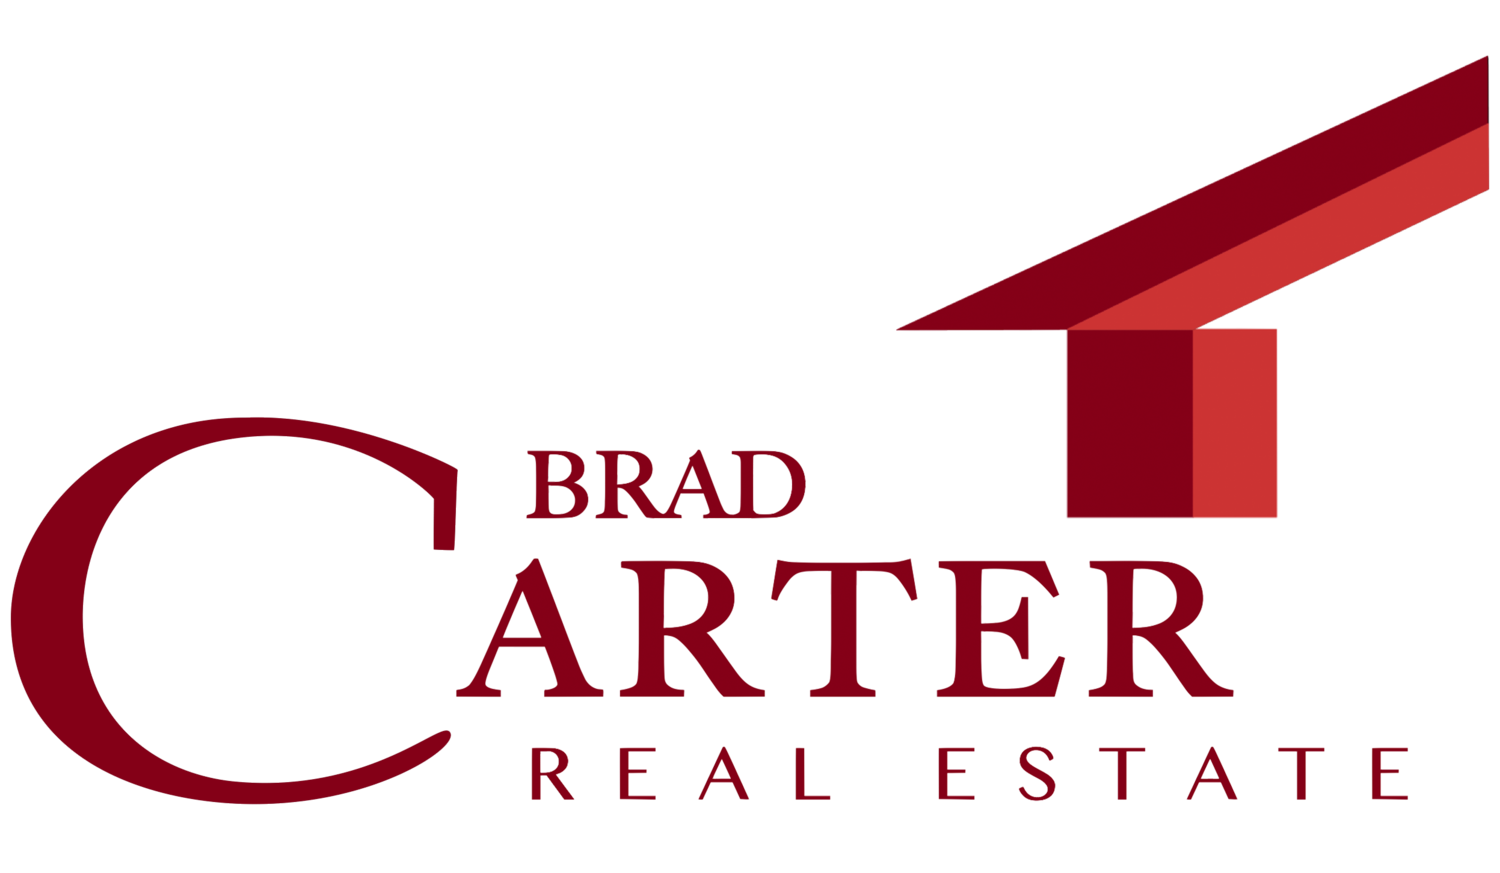 Brad Carter Real Estate